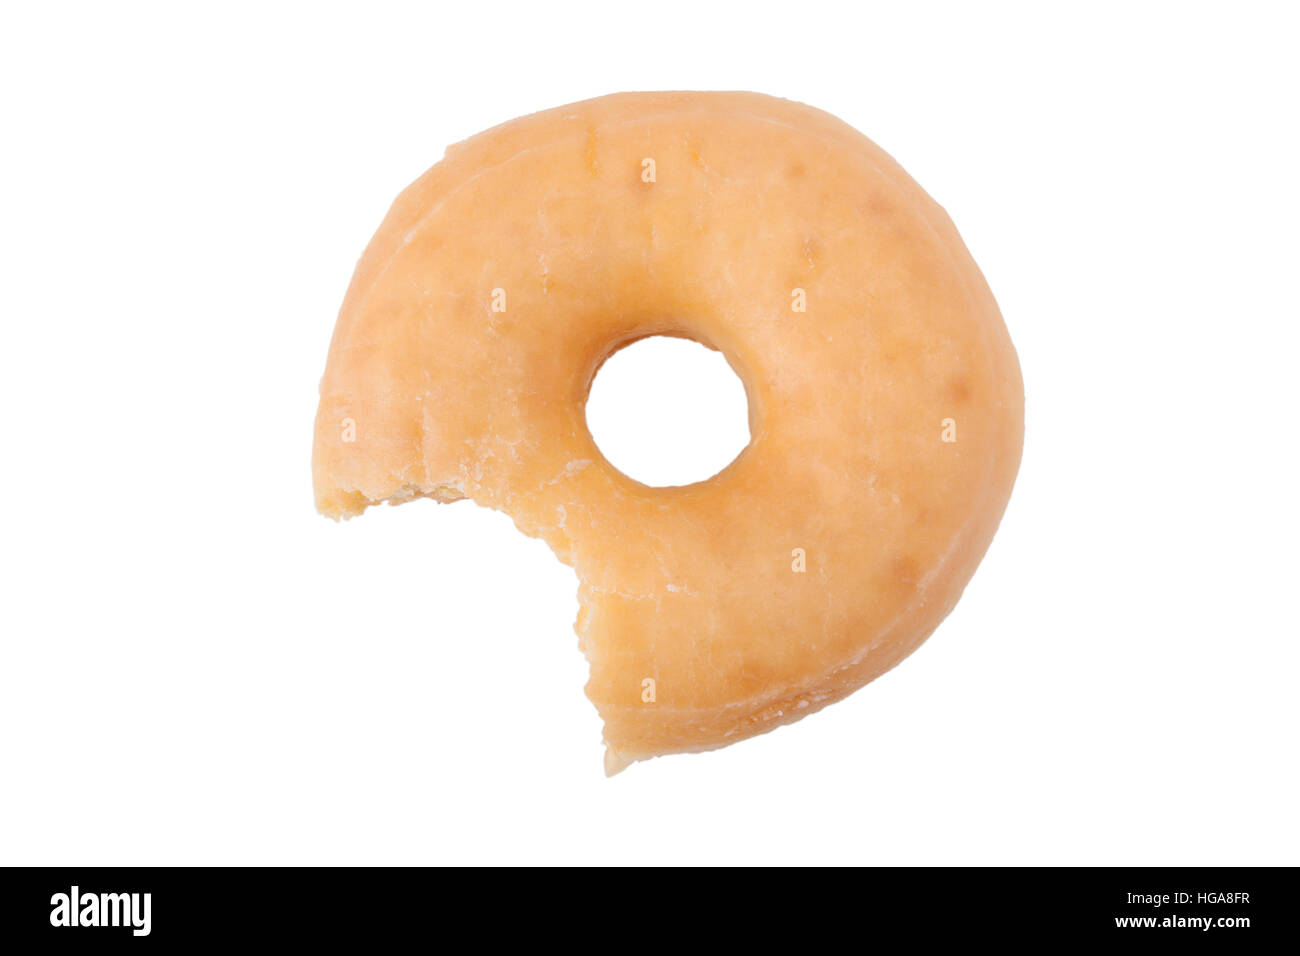 Bitten doughnut or donut isolated on white background Stock Photo